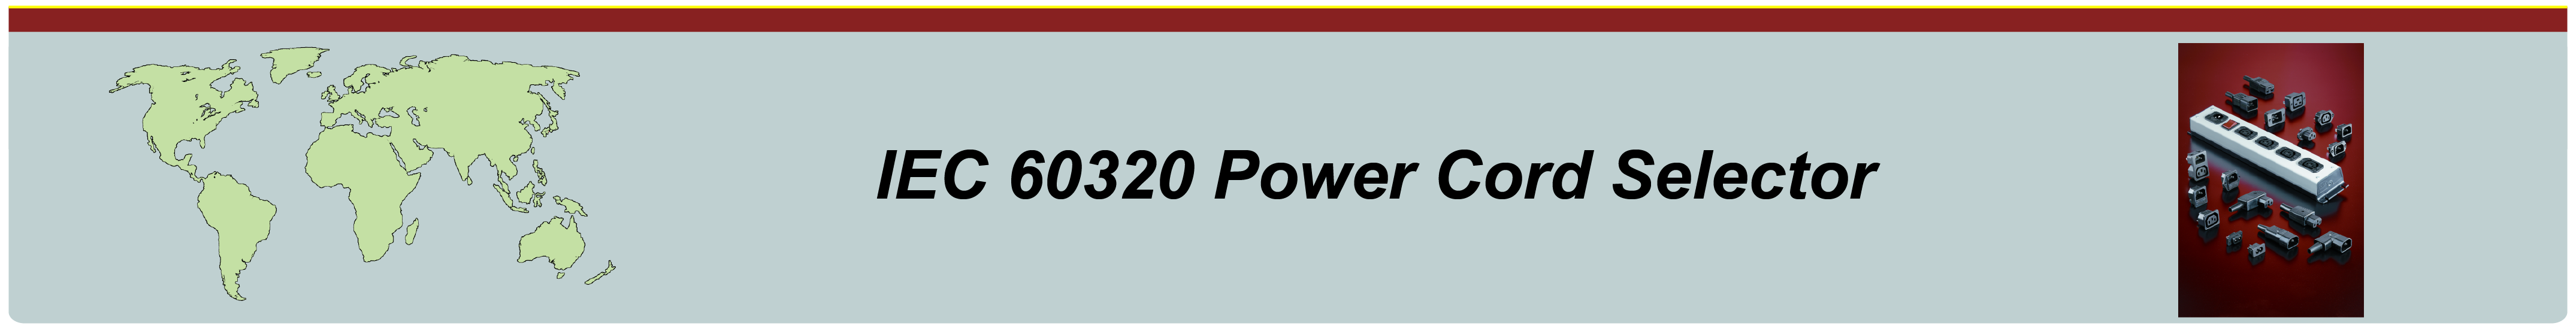 IEC 60320 Power Cord Selector